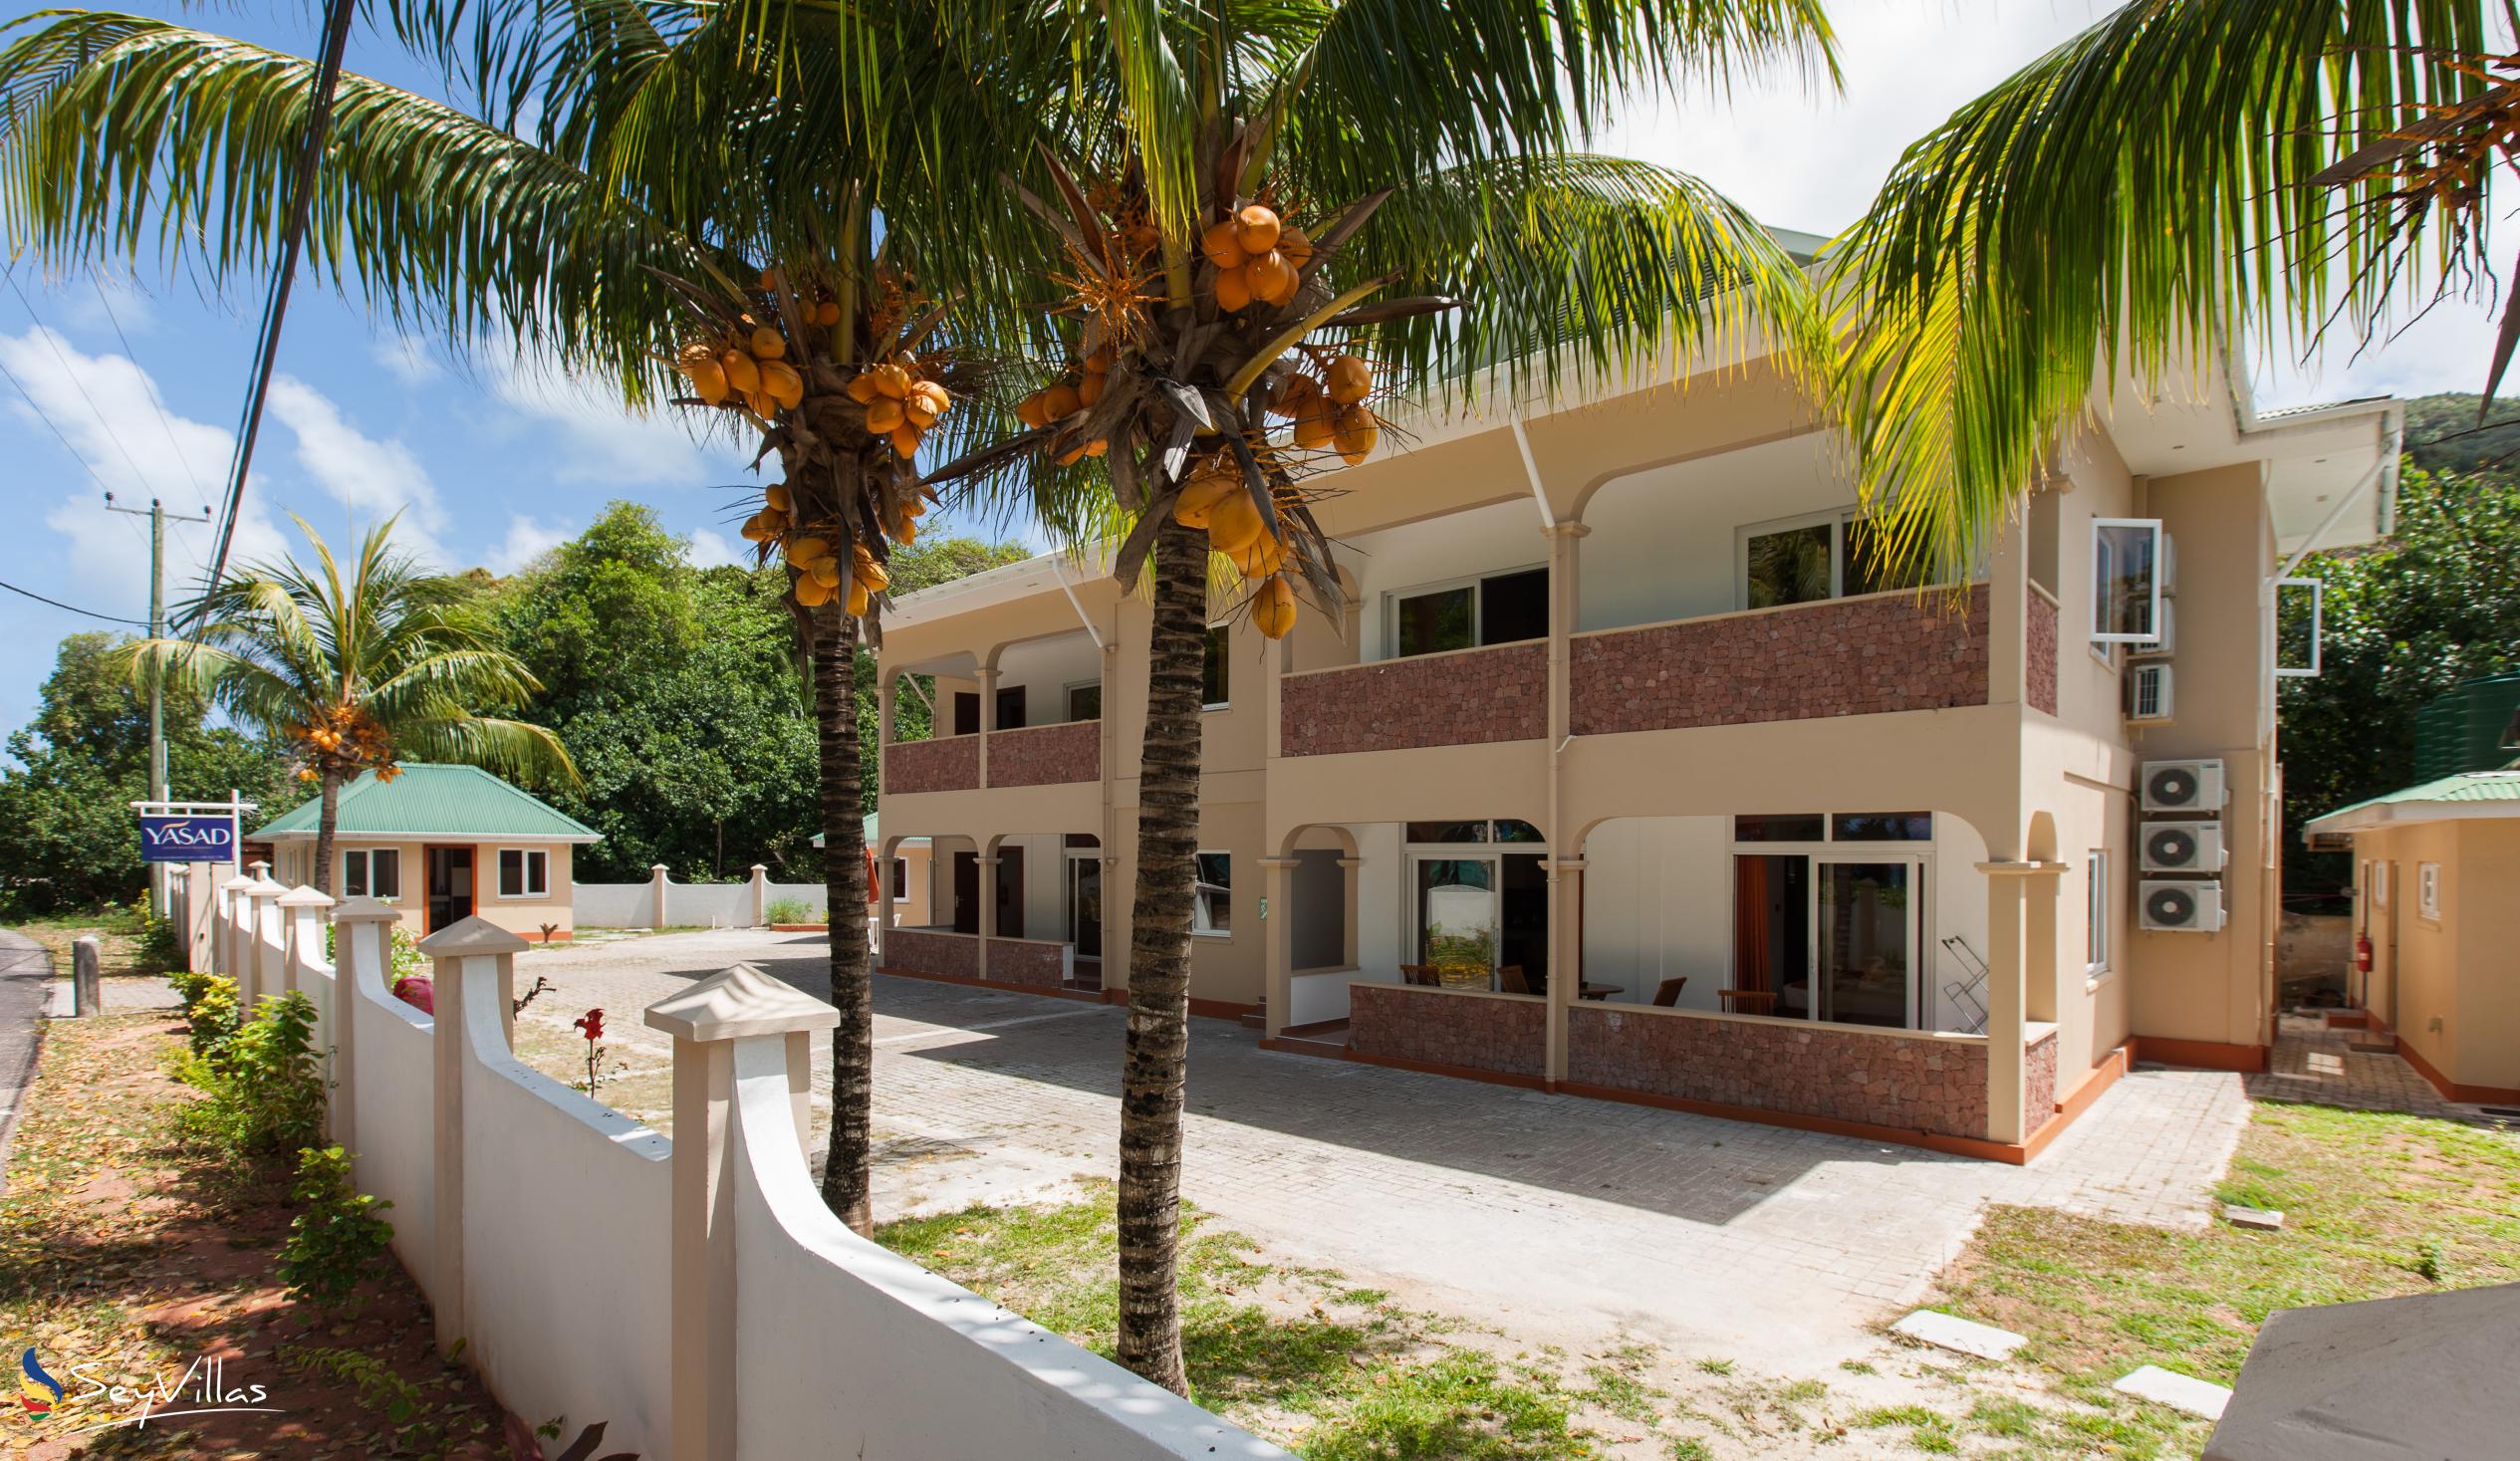 Foto 47: YASAD Luxury Beach Residence - Appartamento con 2 camere da letto - Praslin (Seychelles)